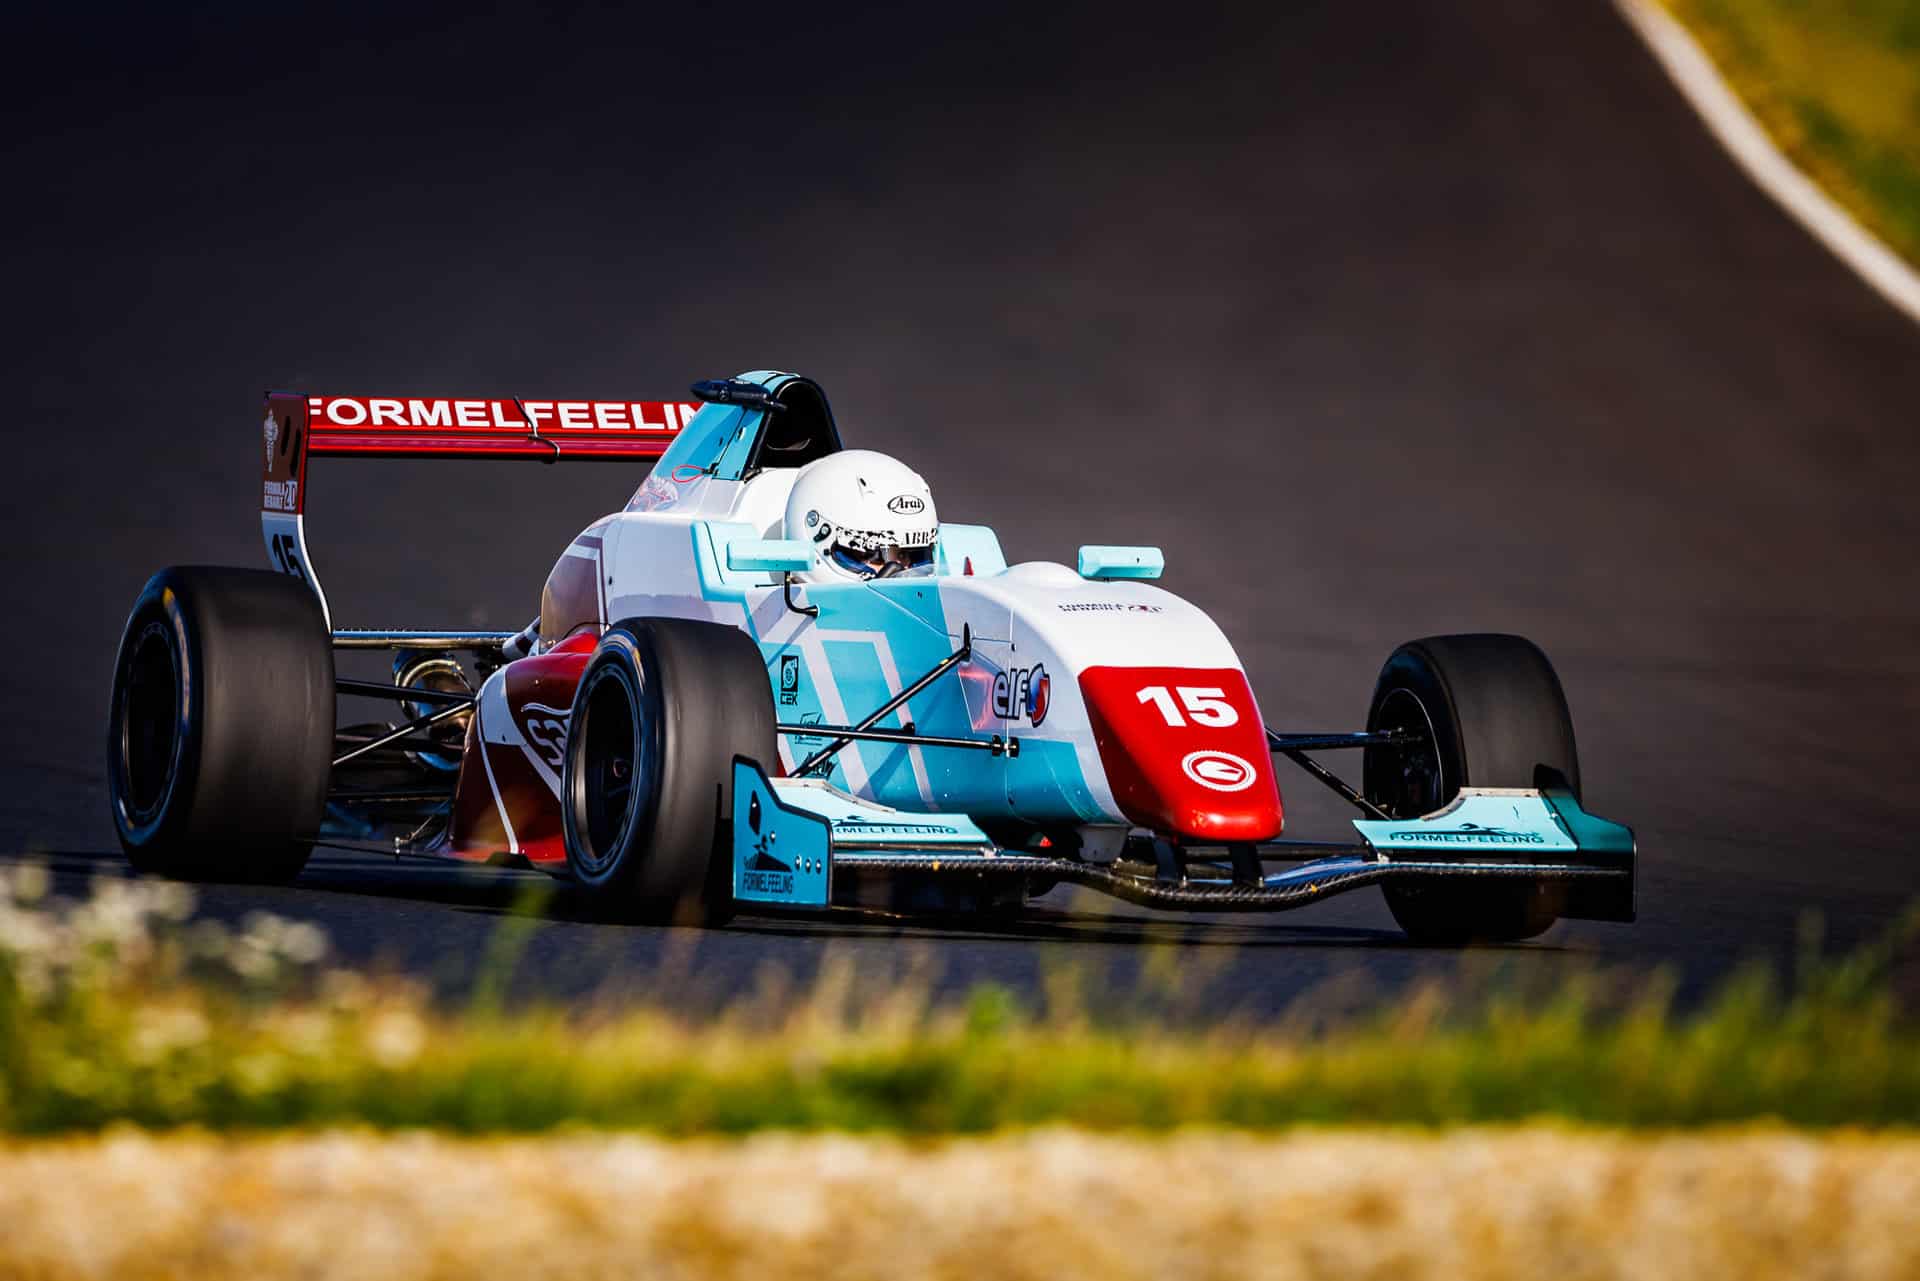 Formel Renault & 1 selber fahren - Formelfeeling